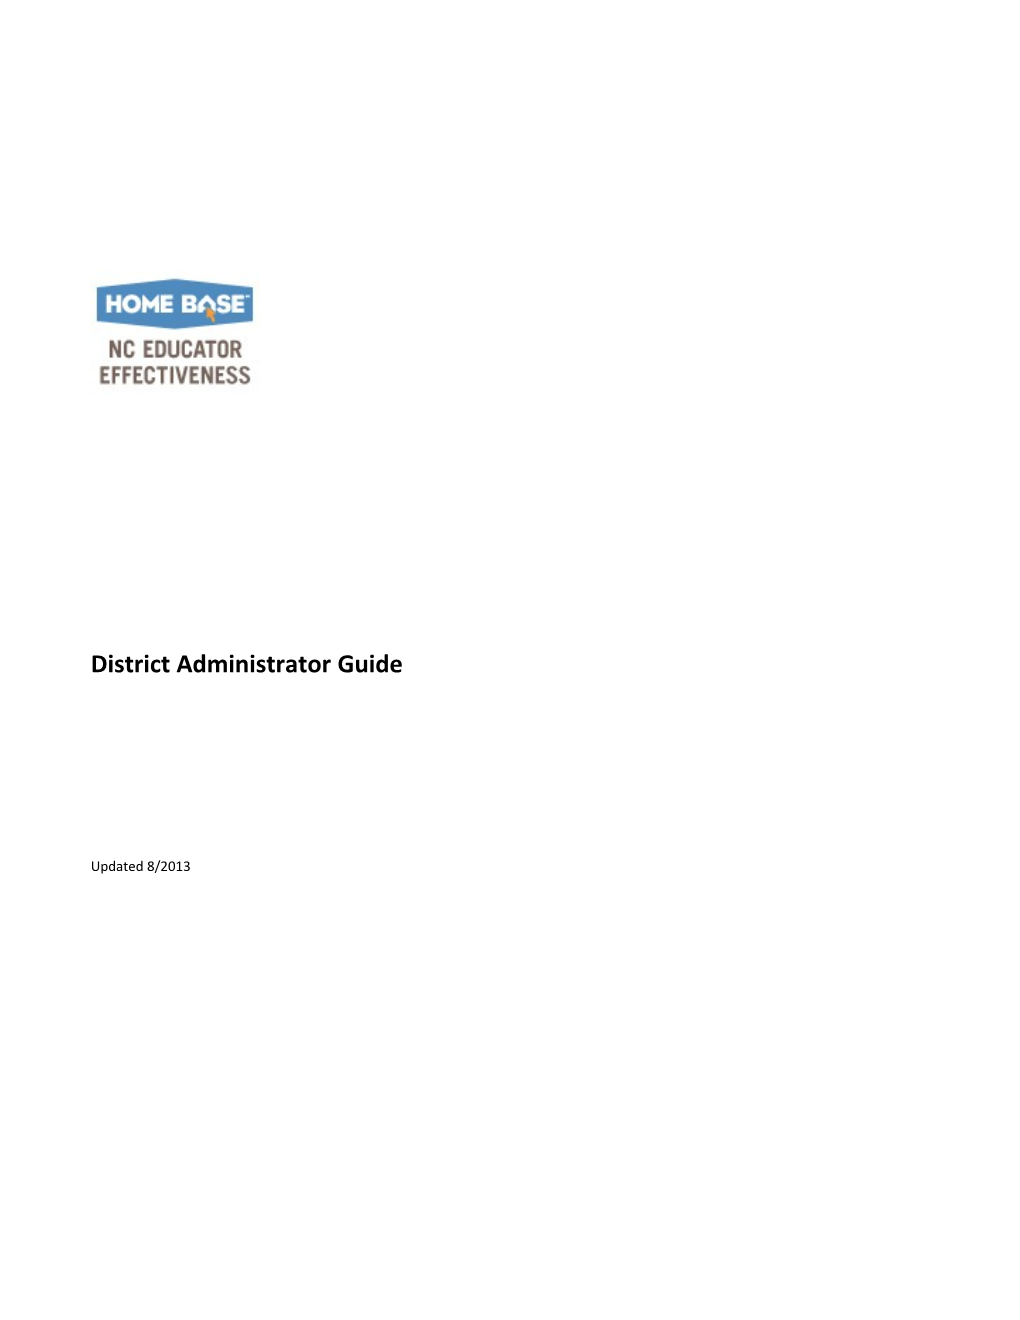 Report Management Admin Guide